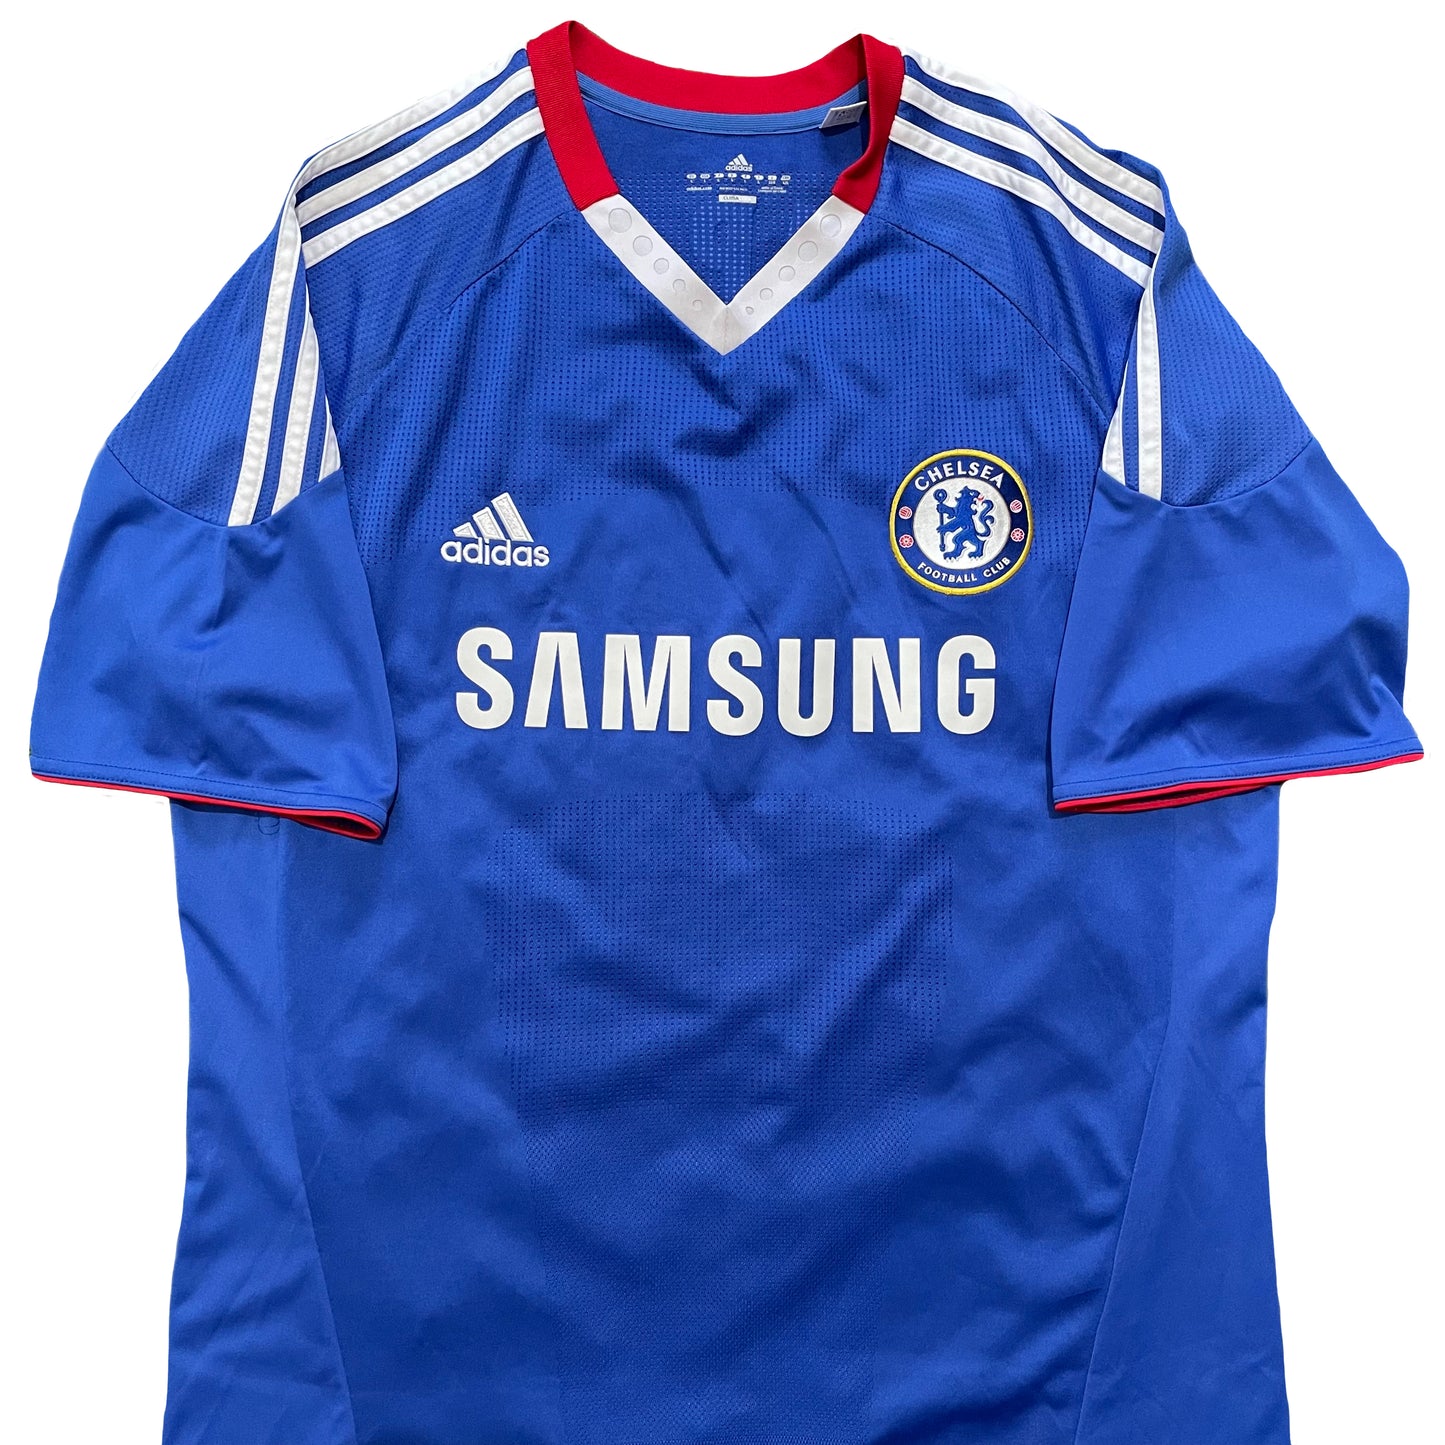 2010-2011 Chelsea FC home shirt #8 Lampard (L)